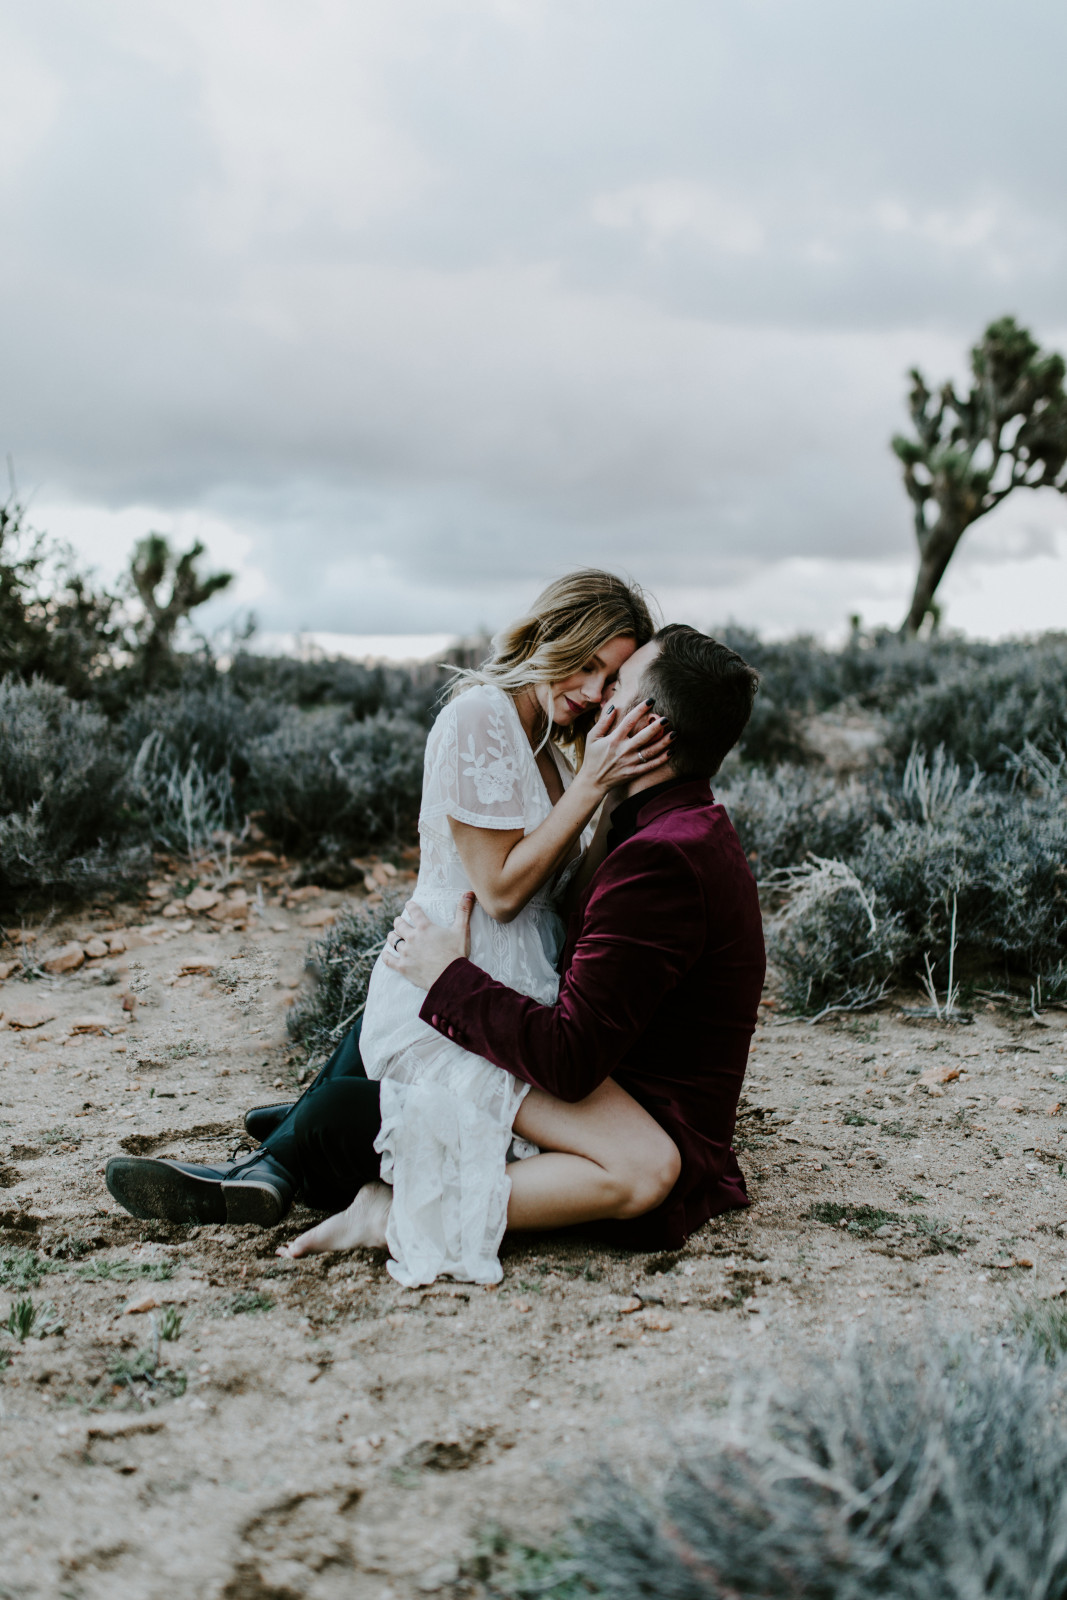 Alyssa and Jeremy kiss. Elopement wedding photography at Joshua Tree National Park by Sienna Plus Josh.